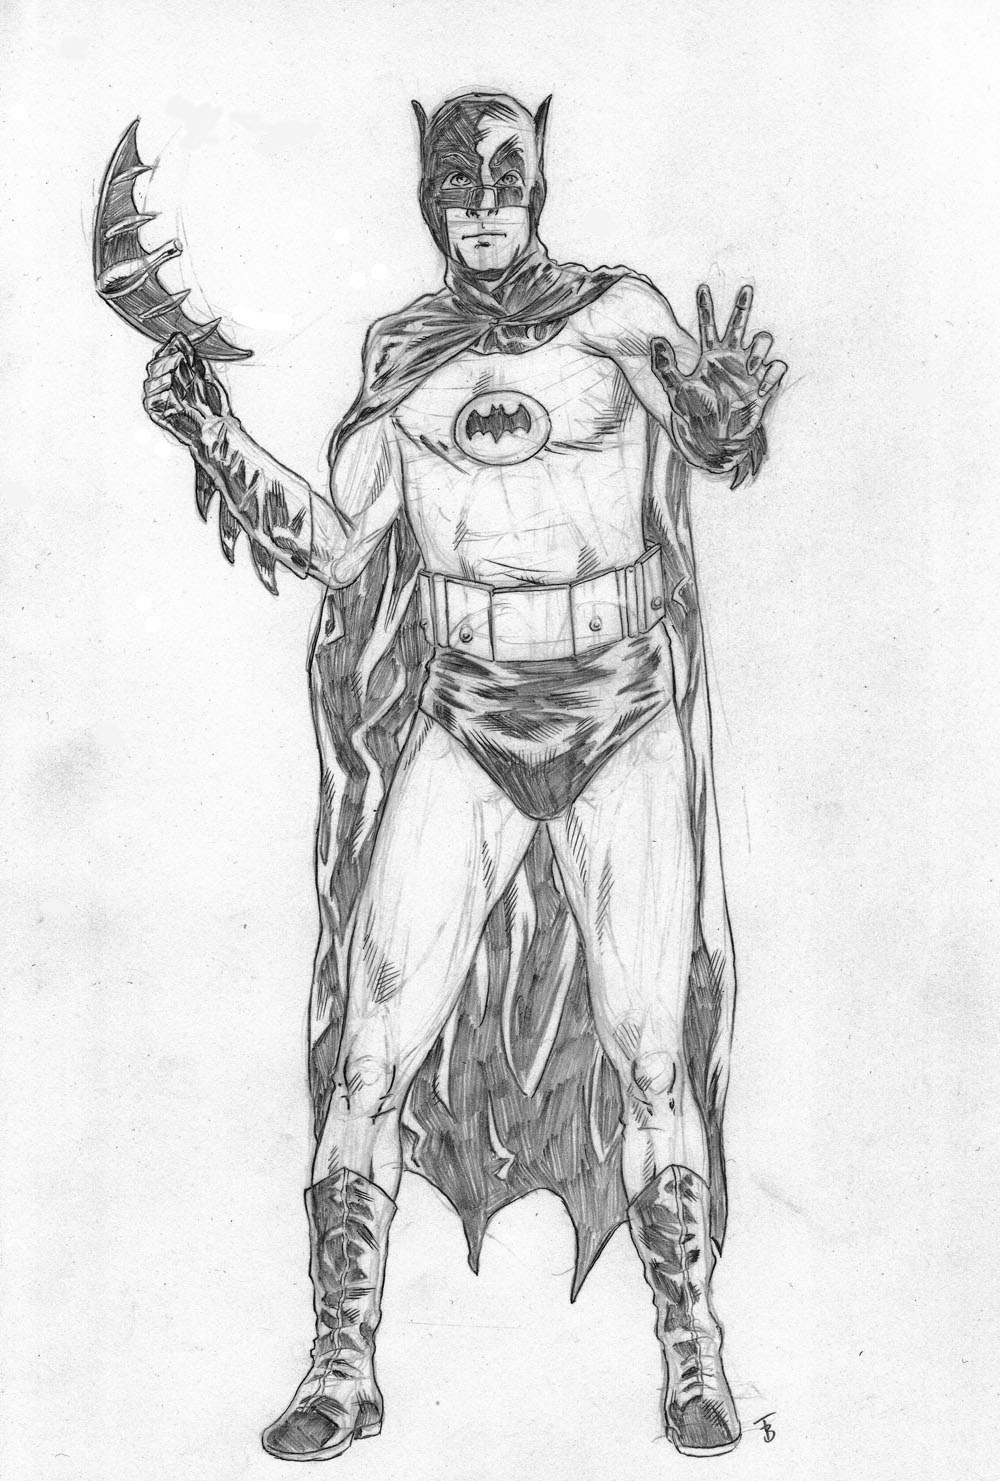 Batman - Adam West style by Thingvold on DeviantArt